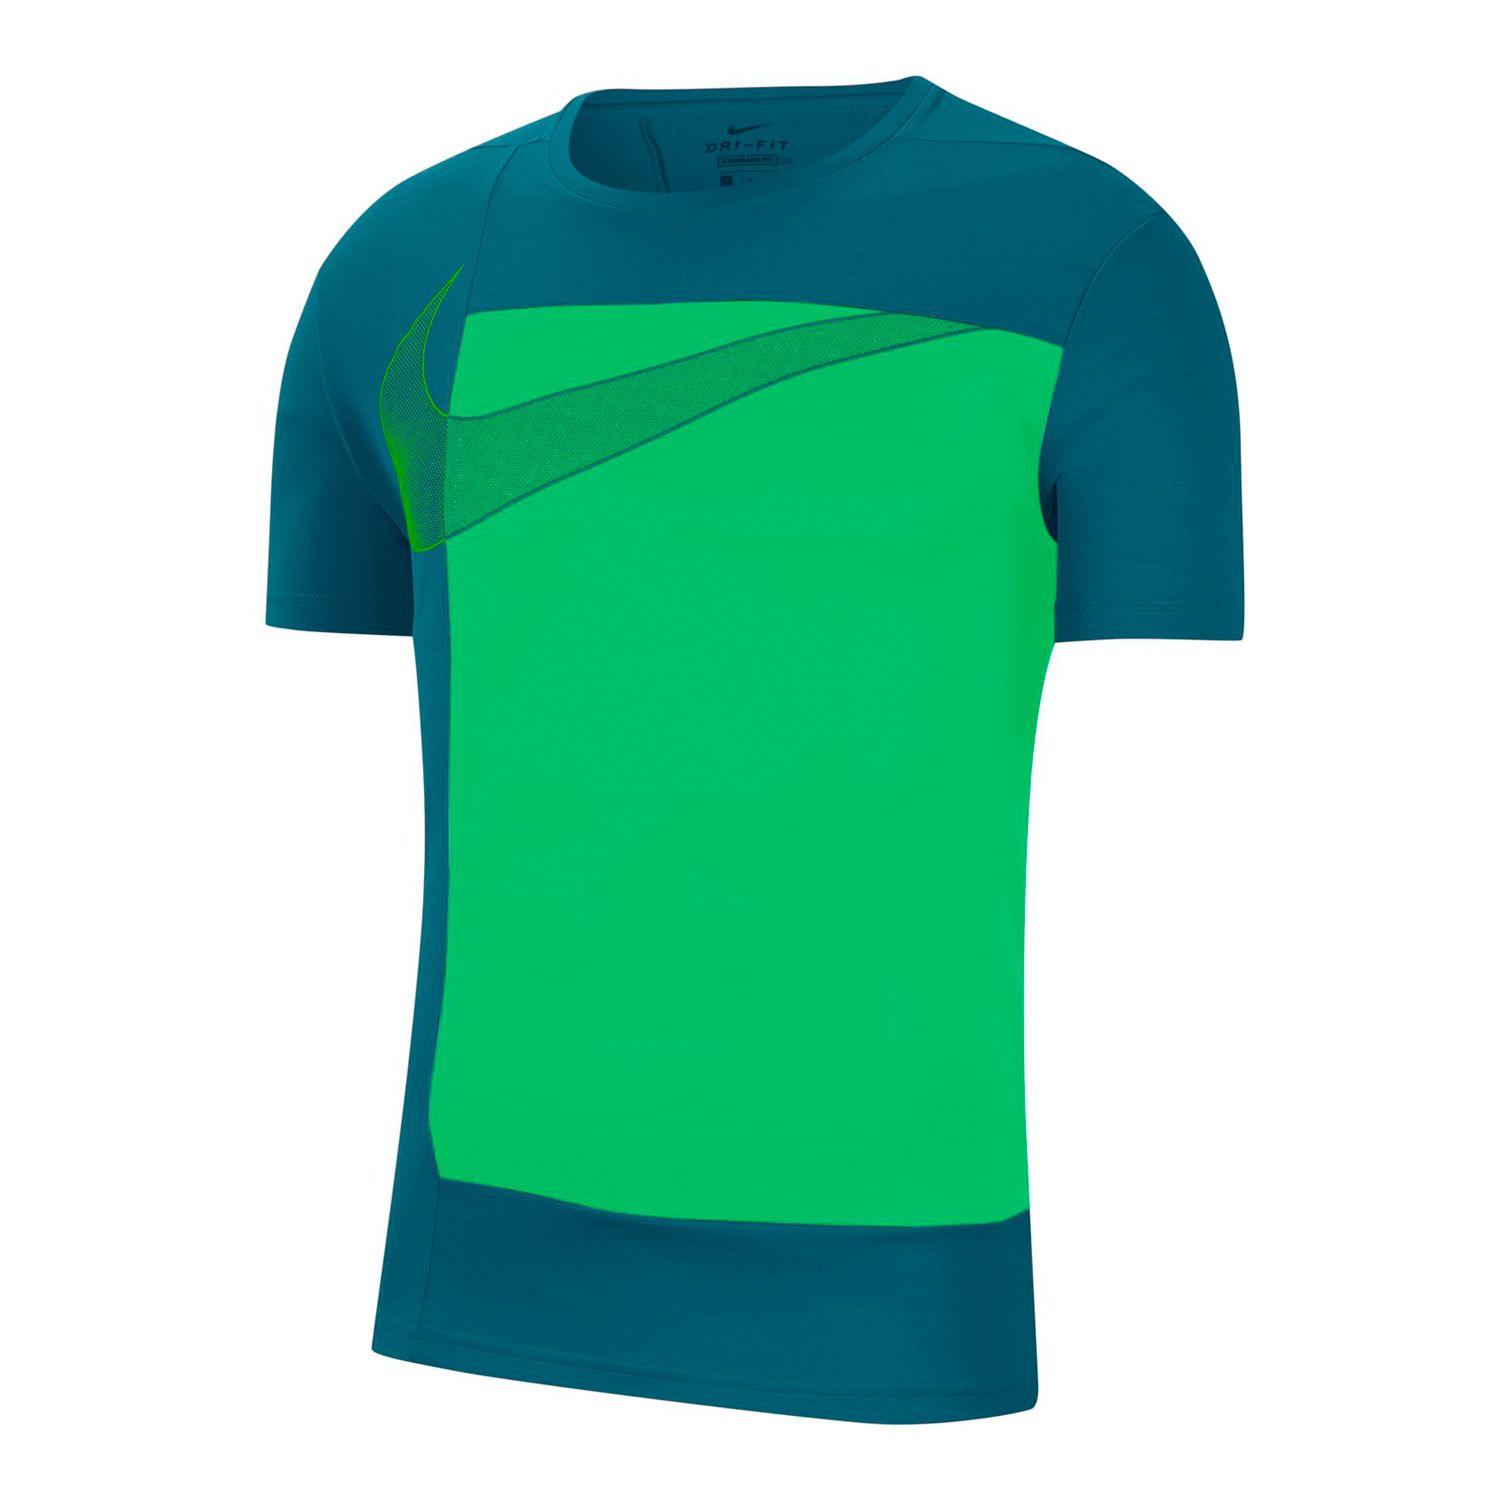 Nike T Shirt Clearance | Kohl's